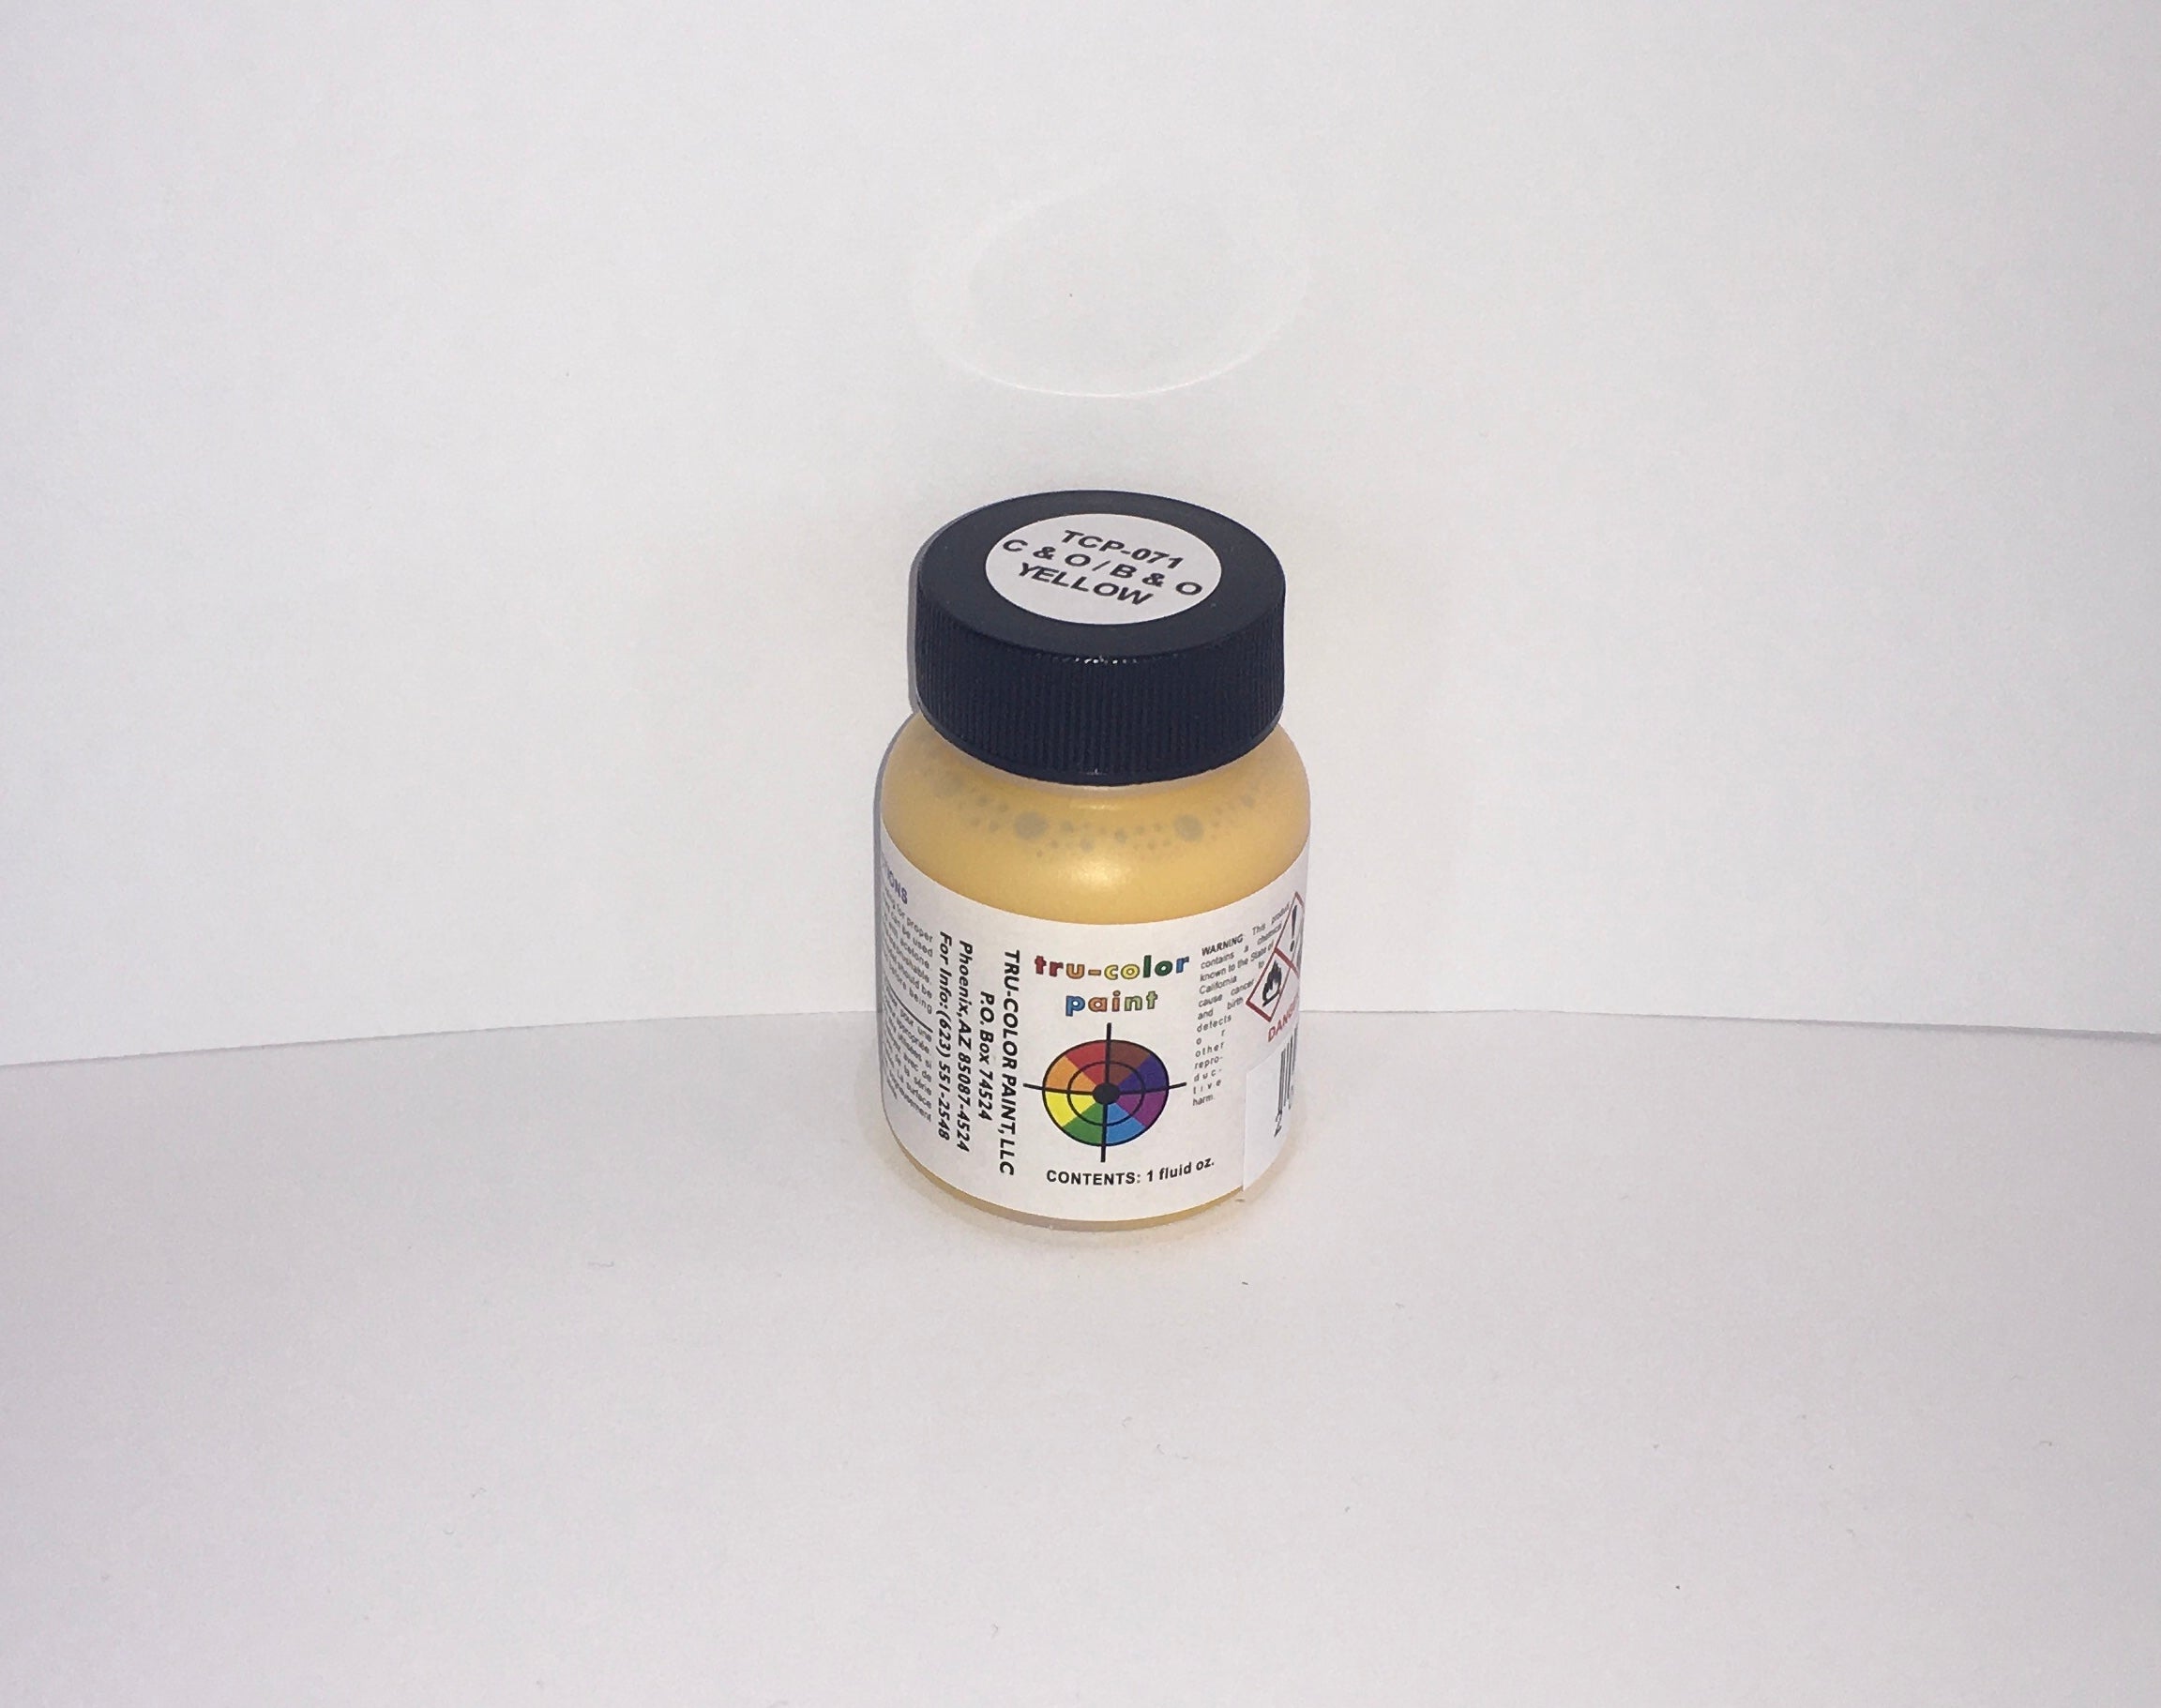 Tru-Color Paint - TCP-071 - Chesapeake & Ohio/Baltimore & Ohio - Yellow (Solvent-Based Paint)